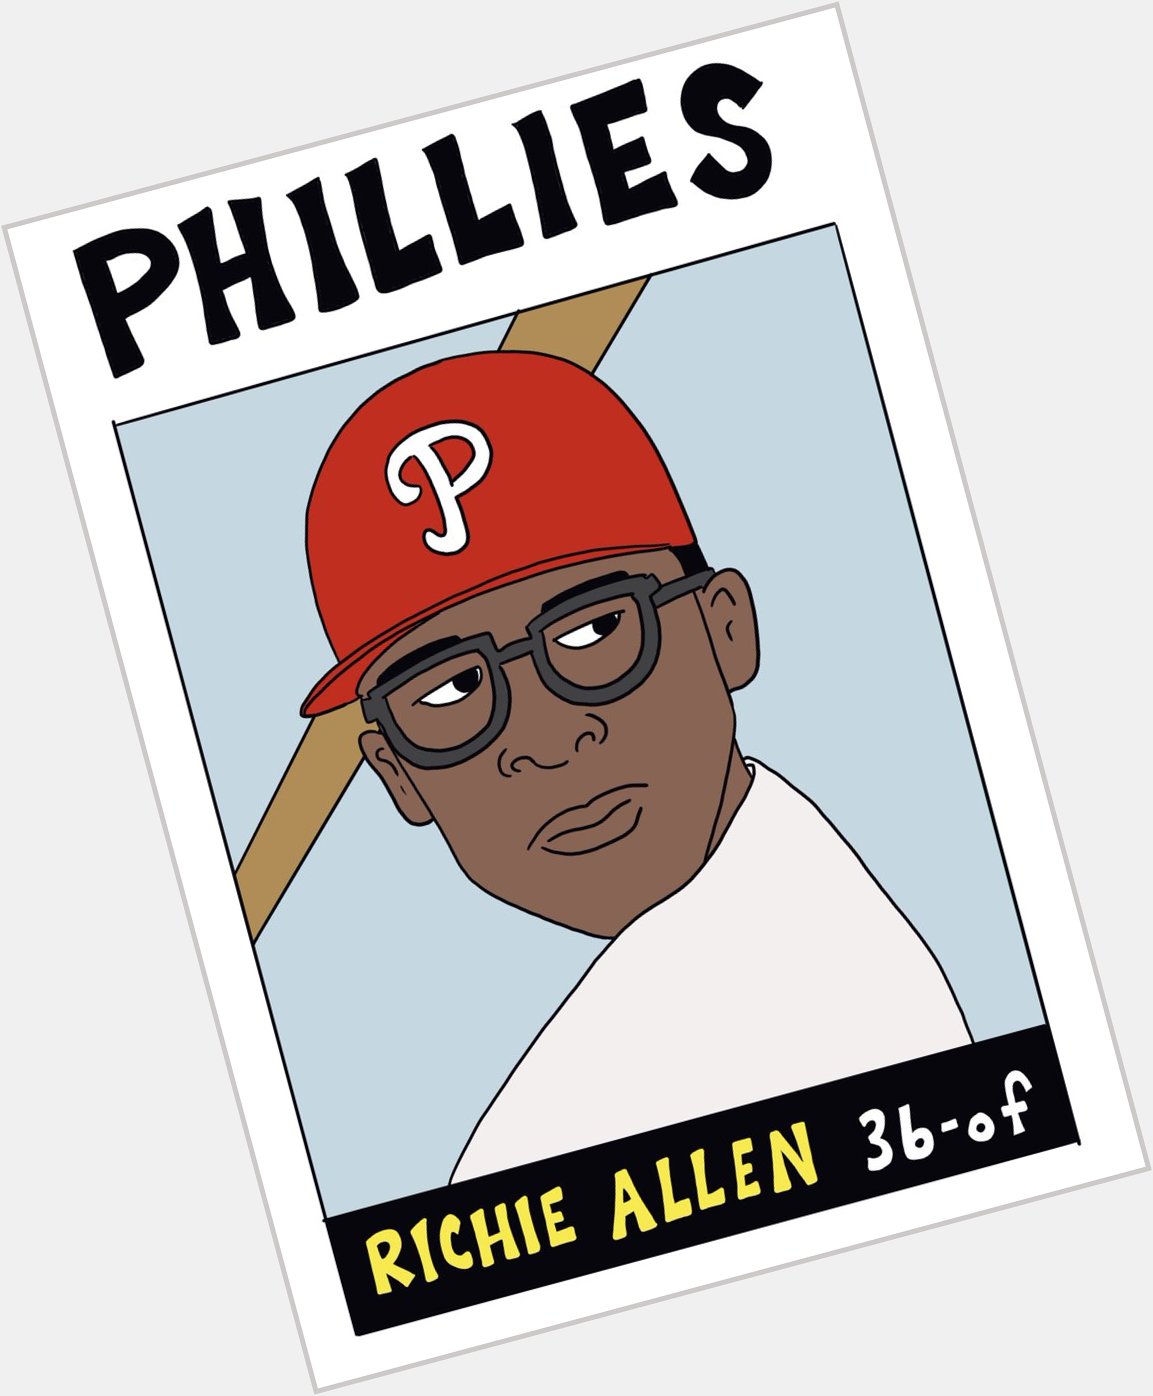 Happy Birthday Dick Allen! 